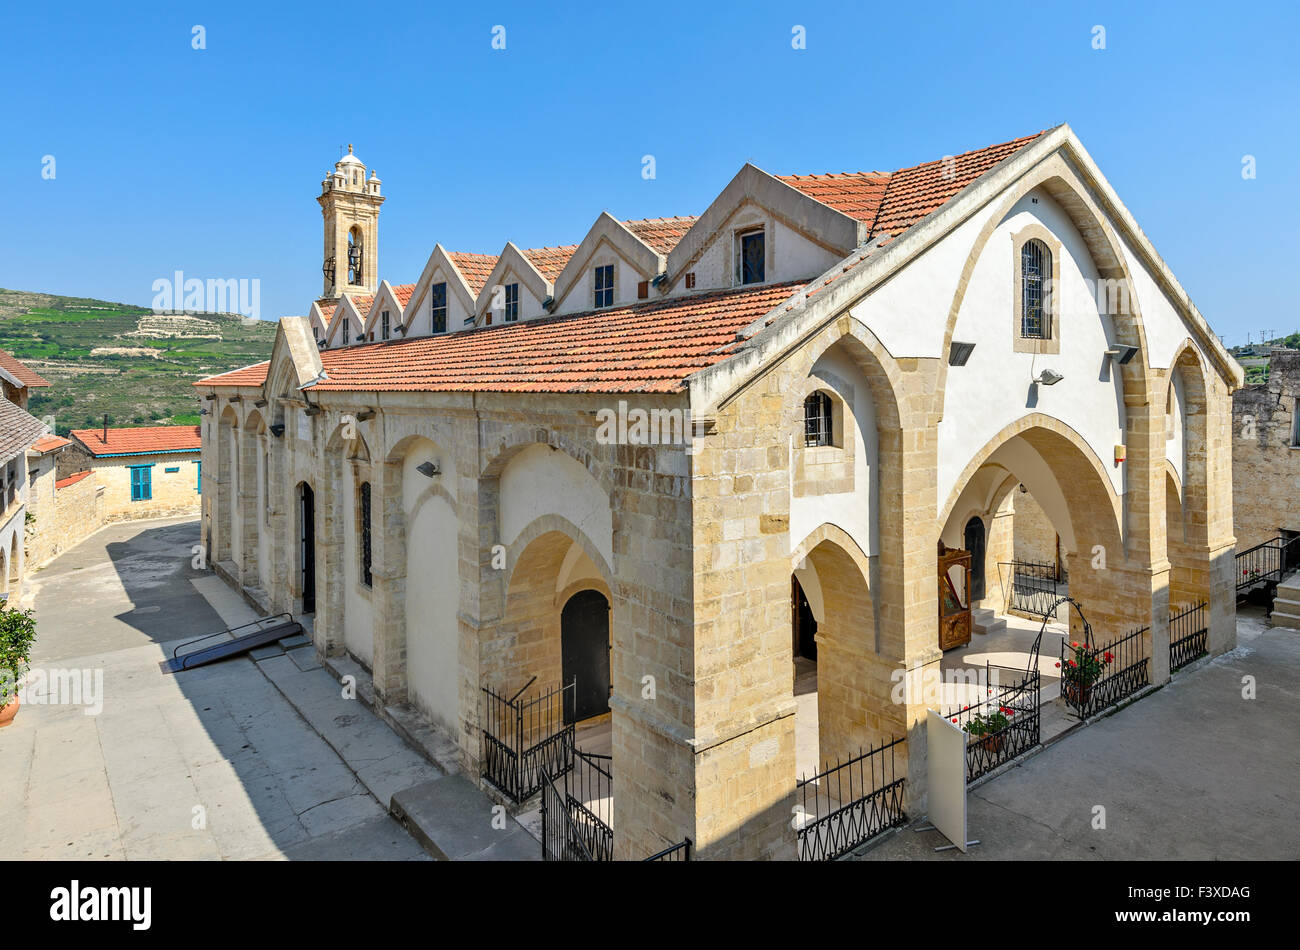 Church in cyprus orthodox monastery Stock Photo